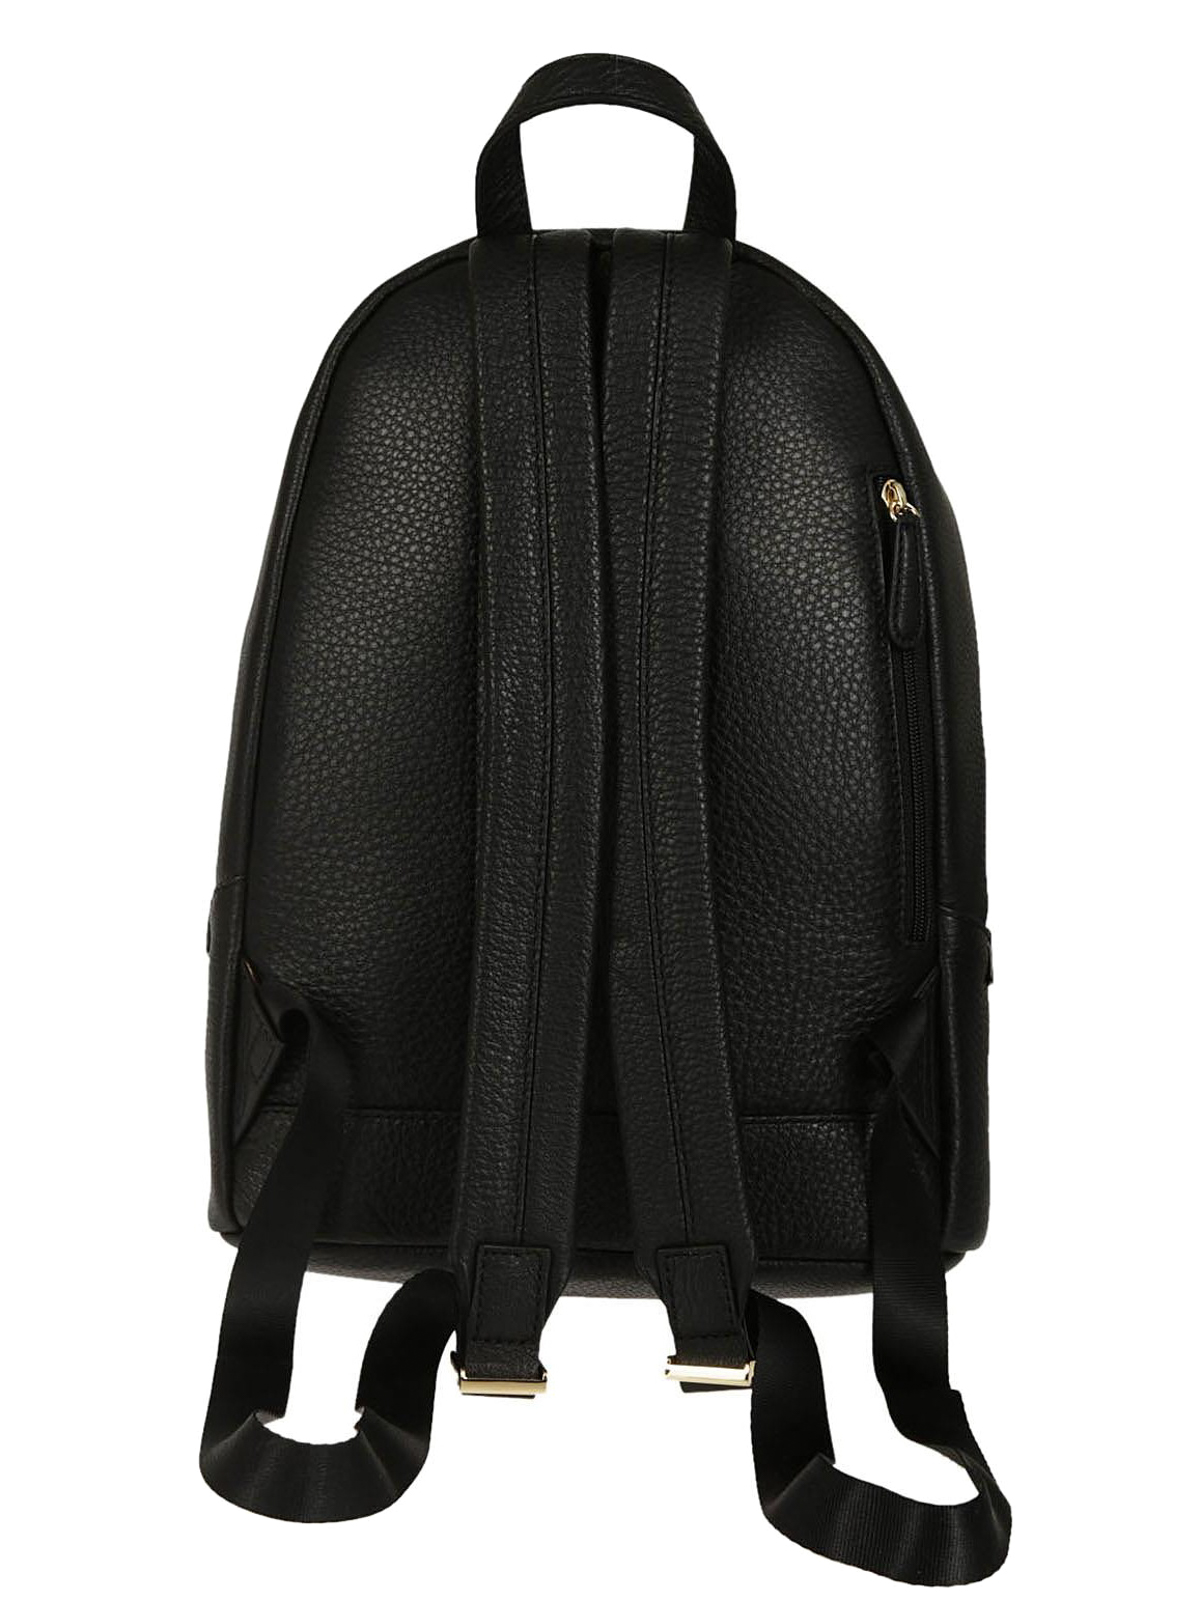 Backpacks Michael Kors - Black full grain leather backpack - 30H7GWGB9L001